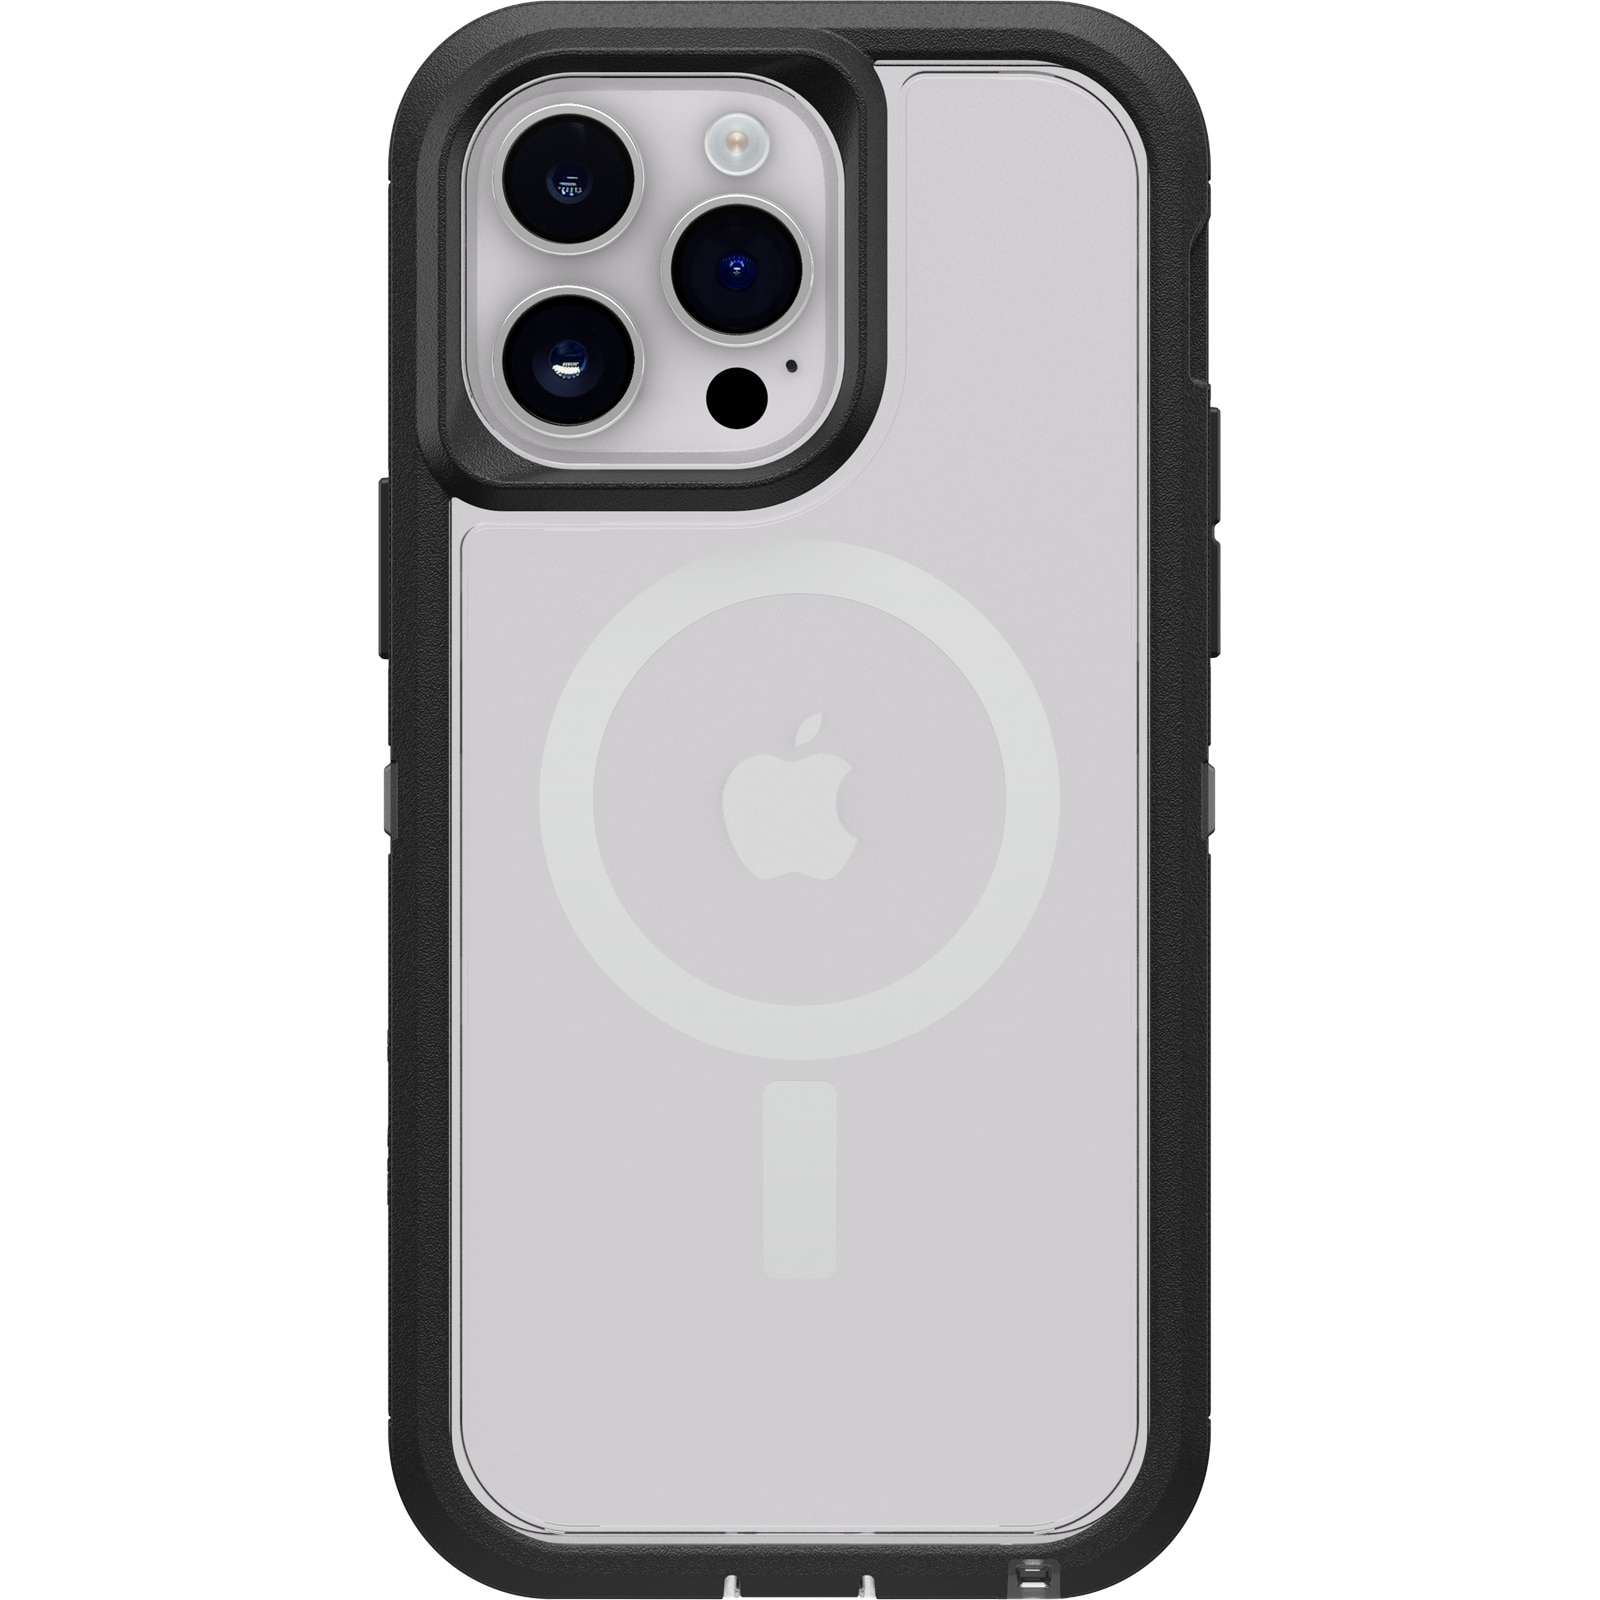 Defender XT Hoesje iPhone 14 Pro Zwart/Transparant